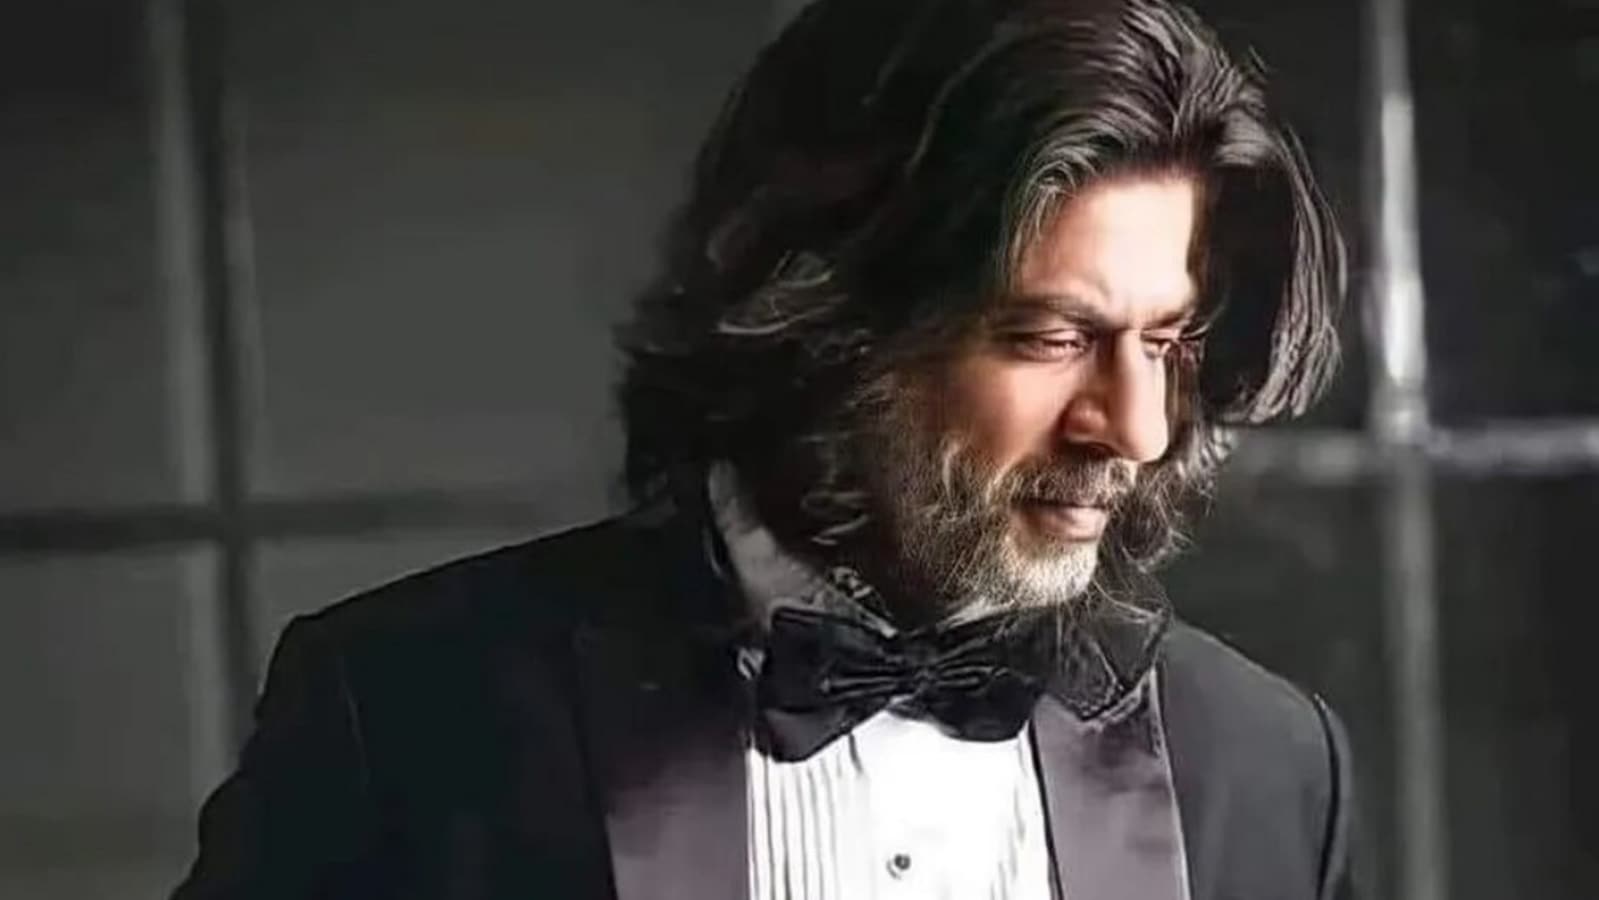 Is shahrukh Khan's hair real? - Quora